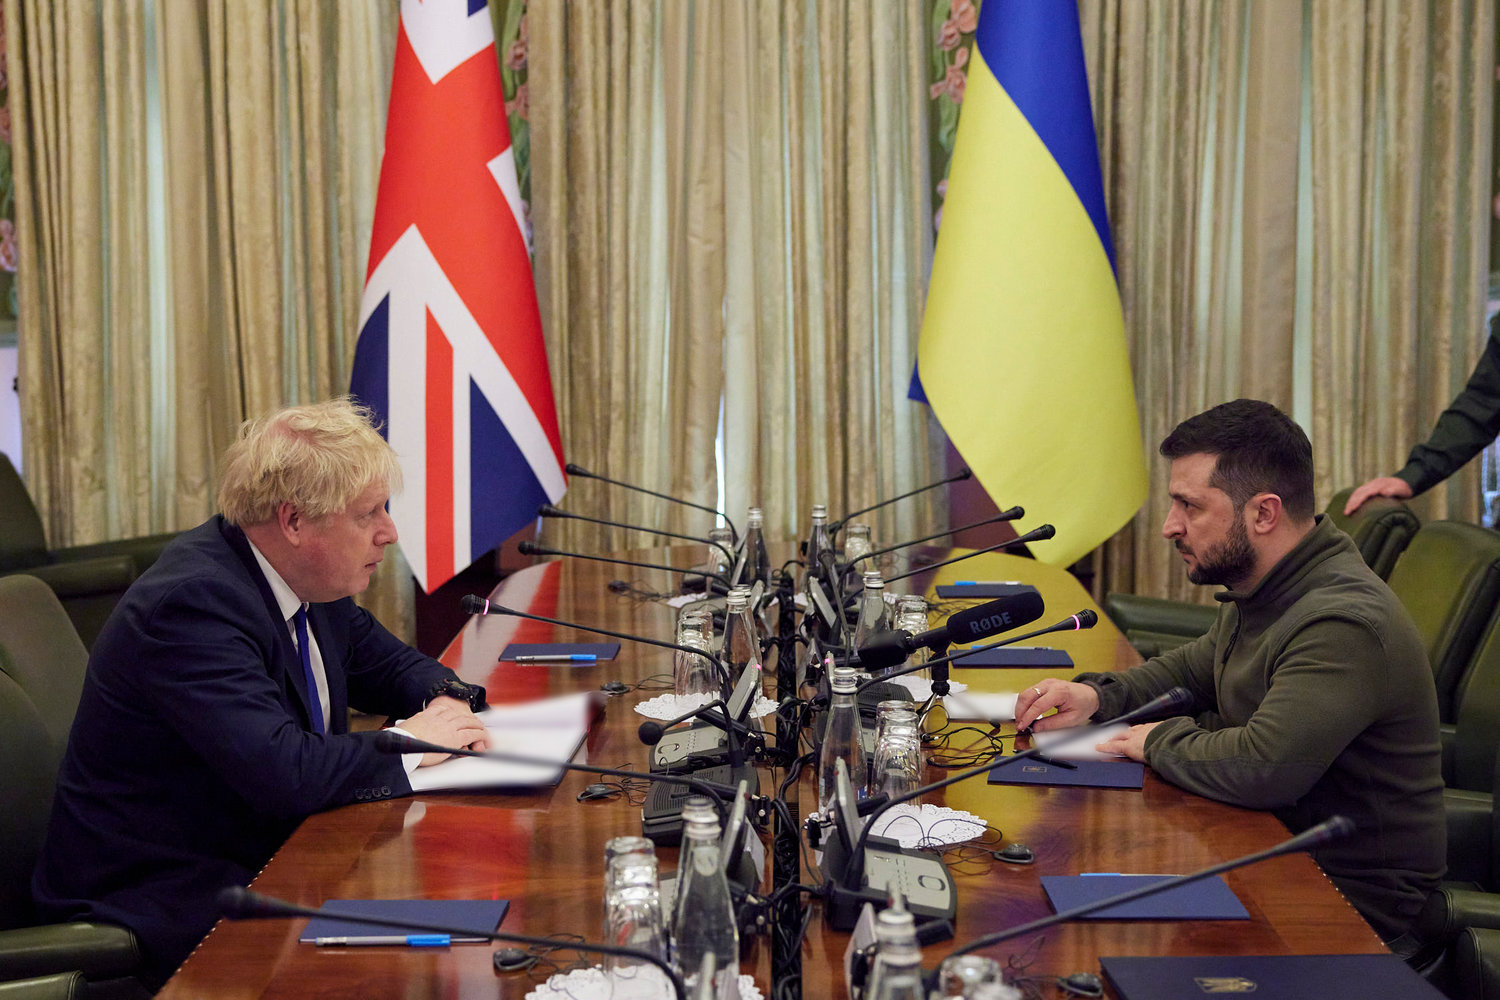 U.K. Prime Minister Boris Johnson meets with Ukrainian President Volodymyr Zelenskyy during an unannounced visit on Saturday, April 9, 2022, in Kyiv, Ukraine. (Simon Dawson/Avalon/Zuma Press/TNS)